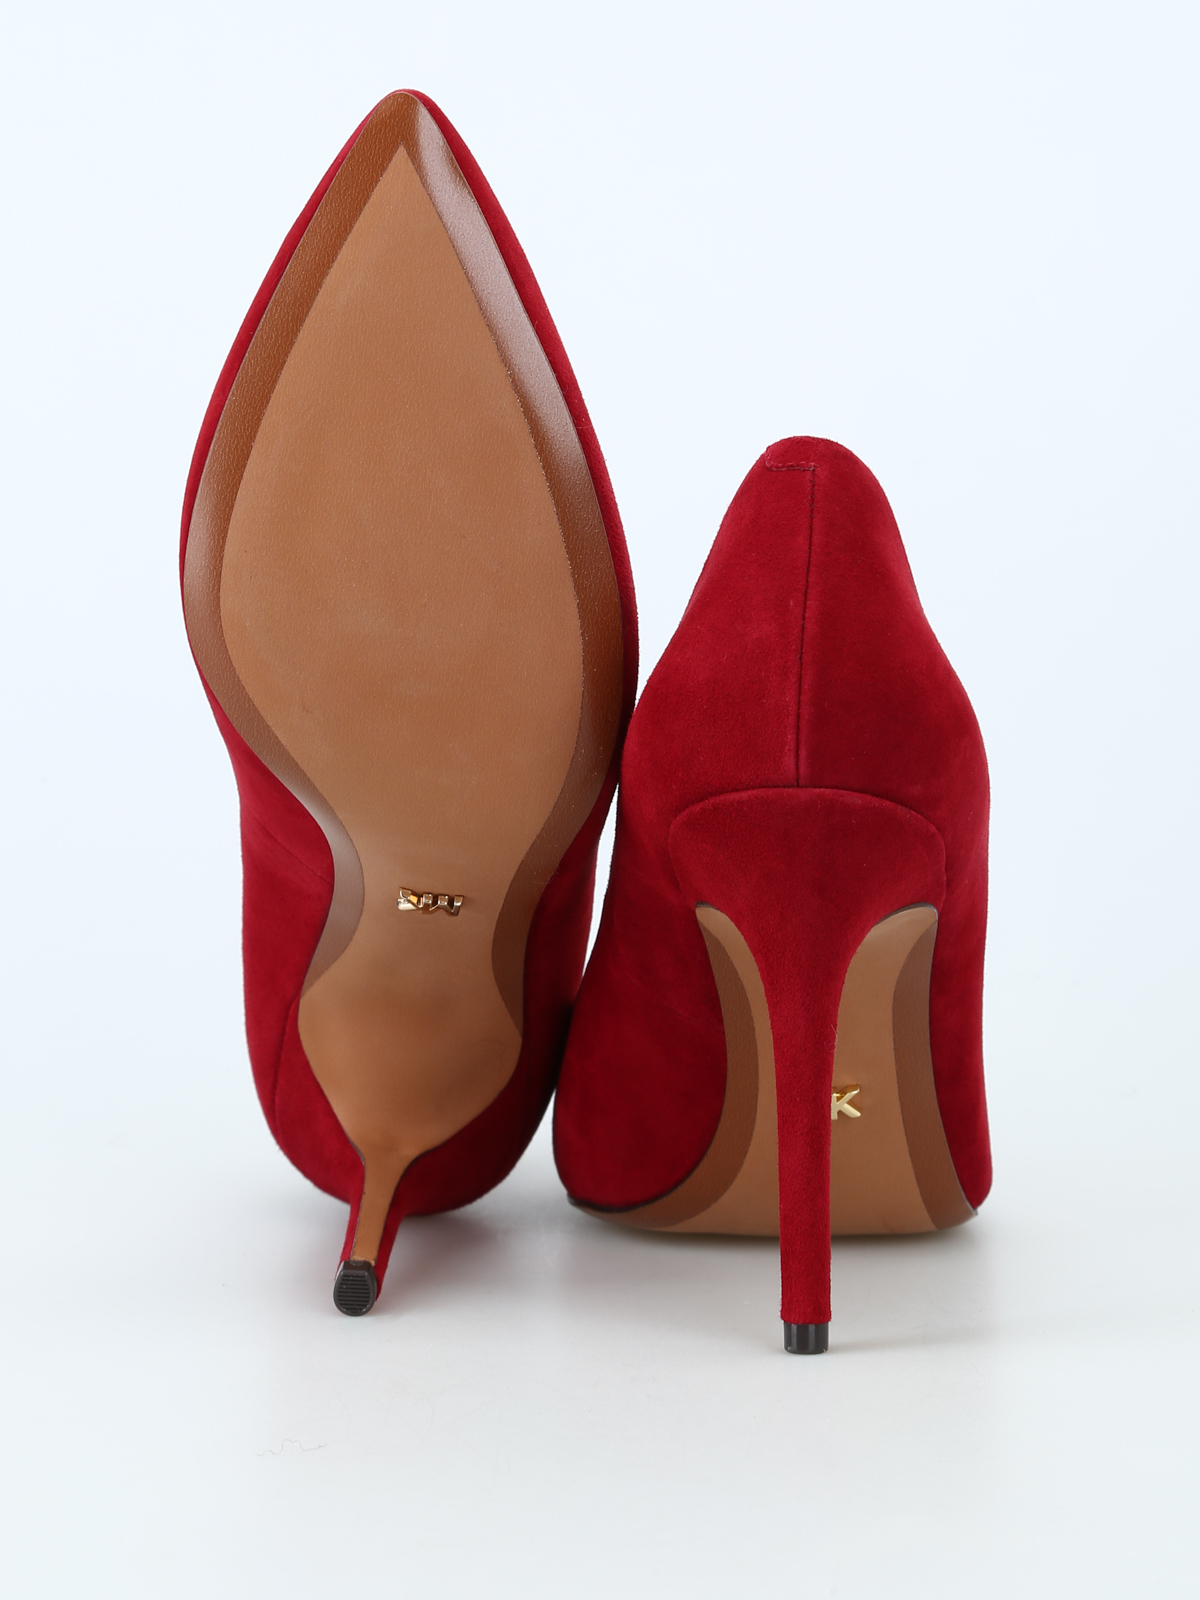 Court shoes Michael Kors - Claire pointy toe suede pumps - 40R7CLHP1S550